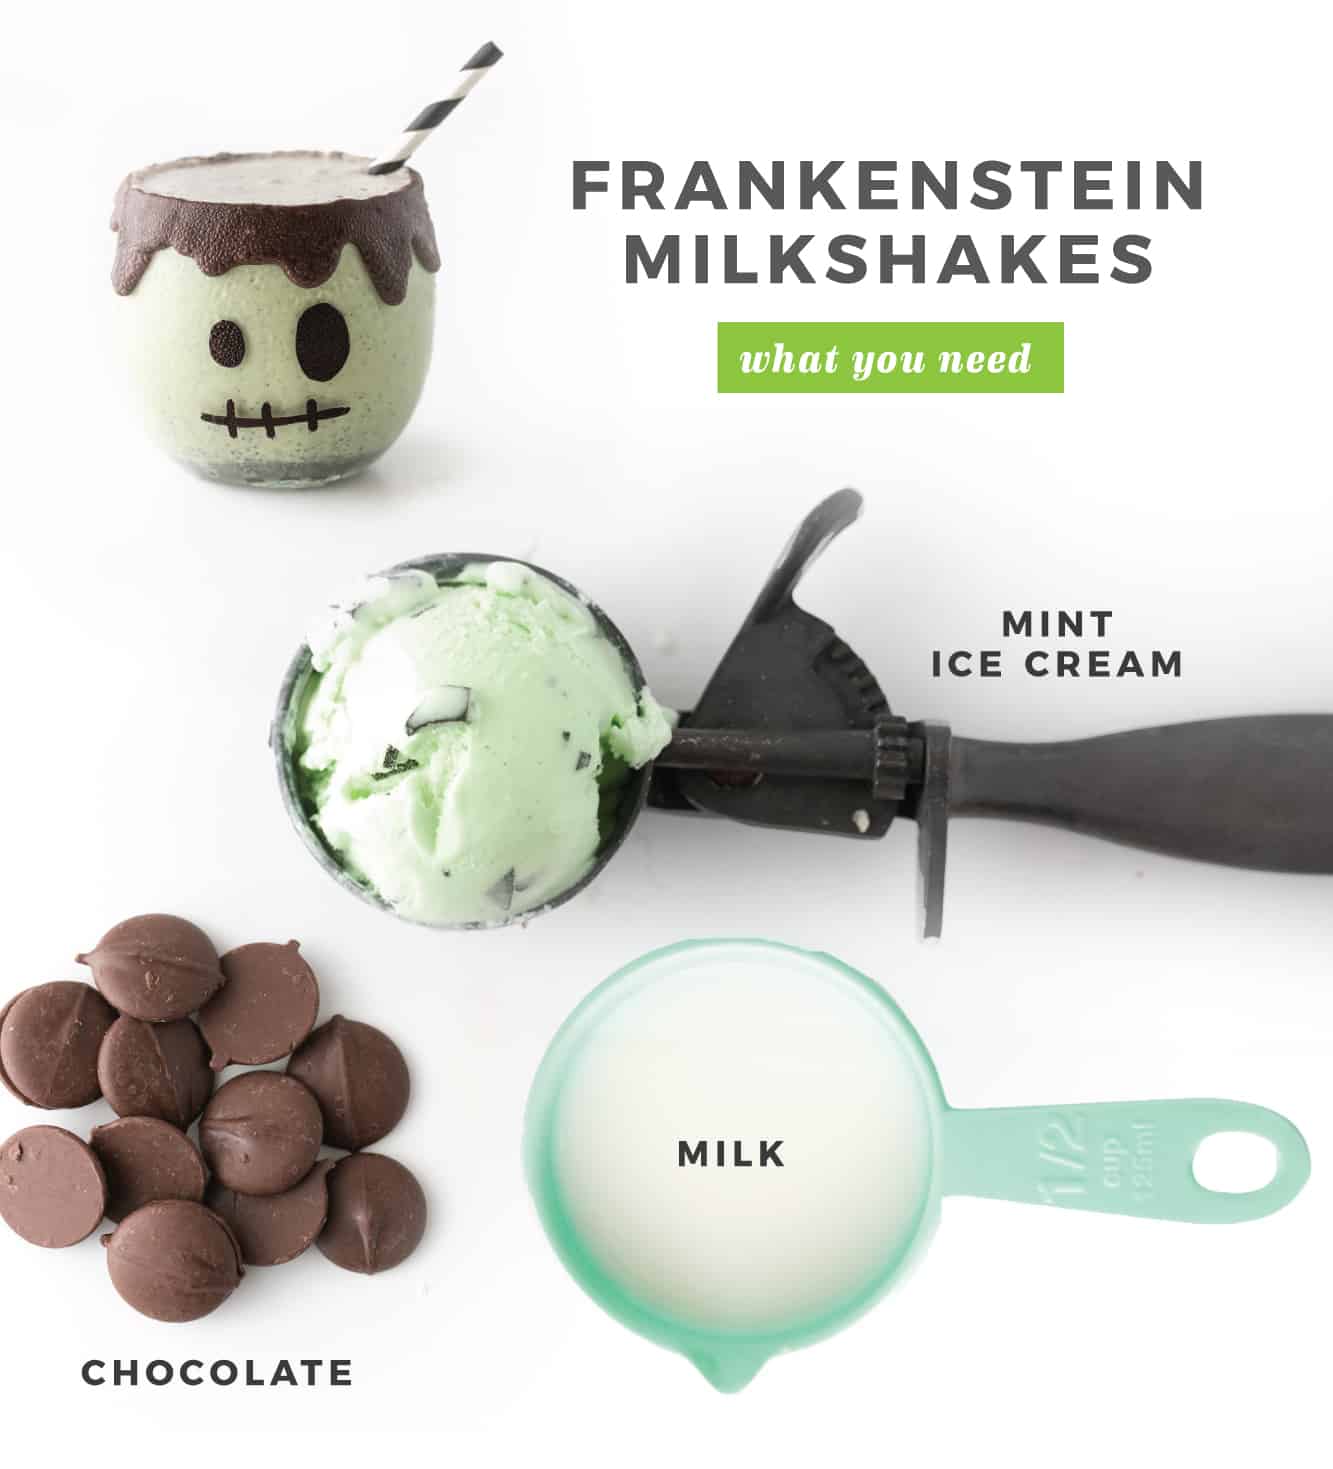 Ingredients to make Frankenstein Halloween Milkshakes. Mint chip ice cream scoop, dark chocolate wafers, blue measuring cup of milk, frankenstein milkshake.